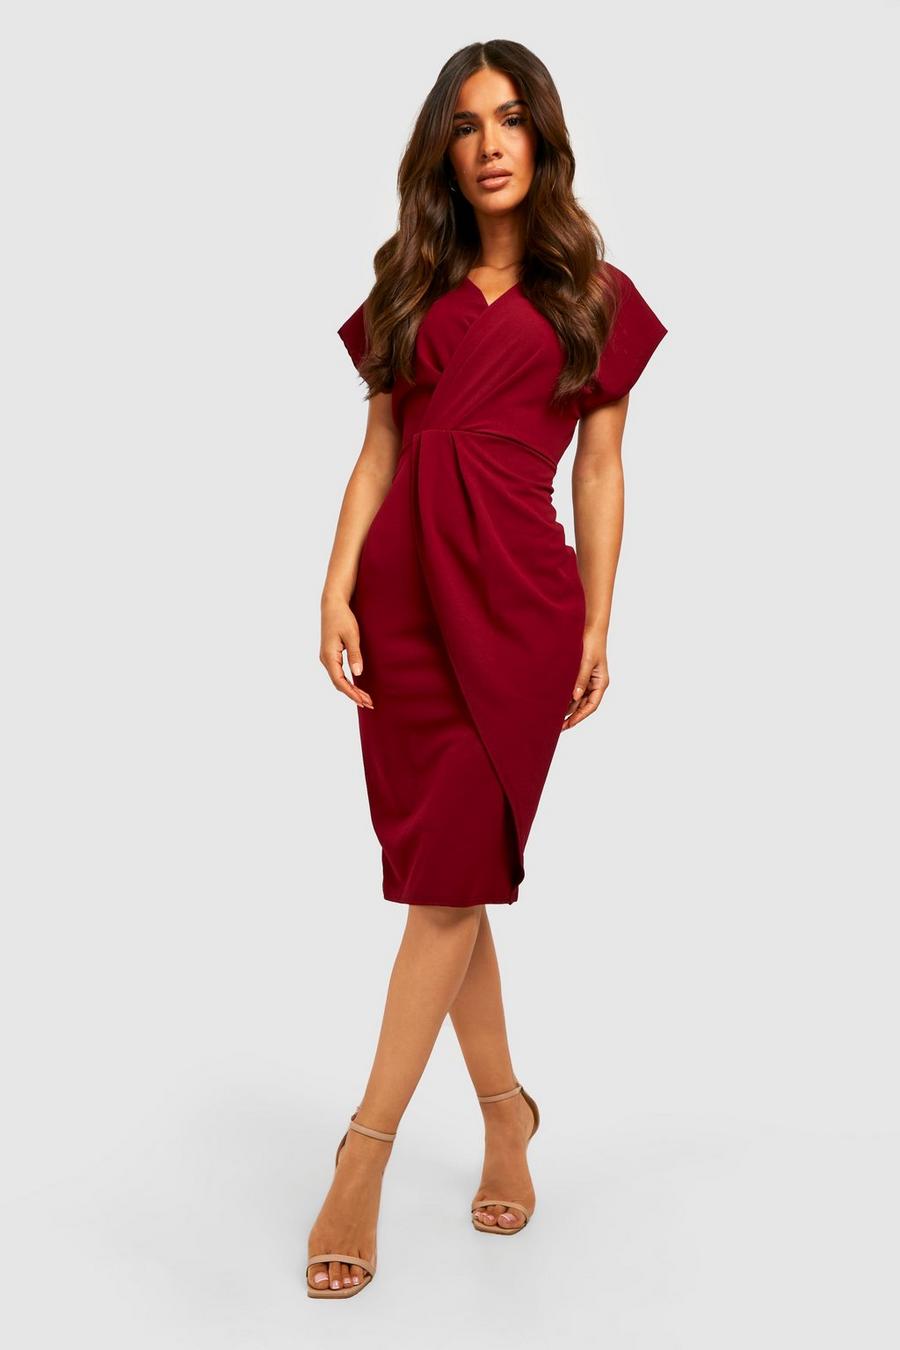 Boohoo size 38 aubergine burgundy tube dress, shapewear dress with